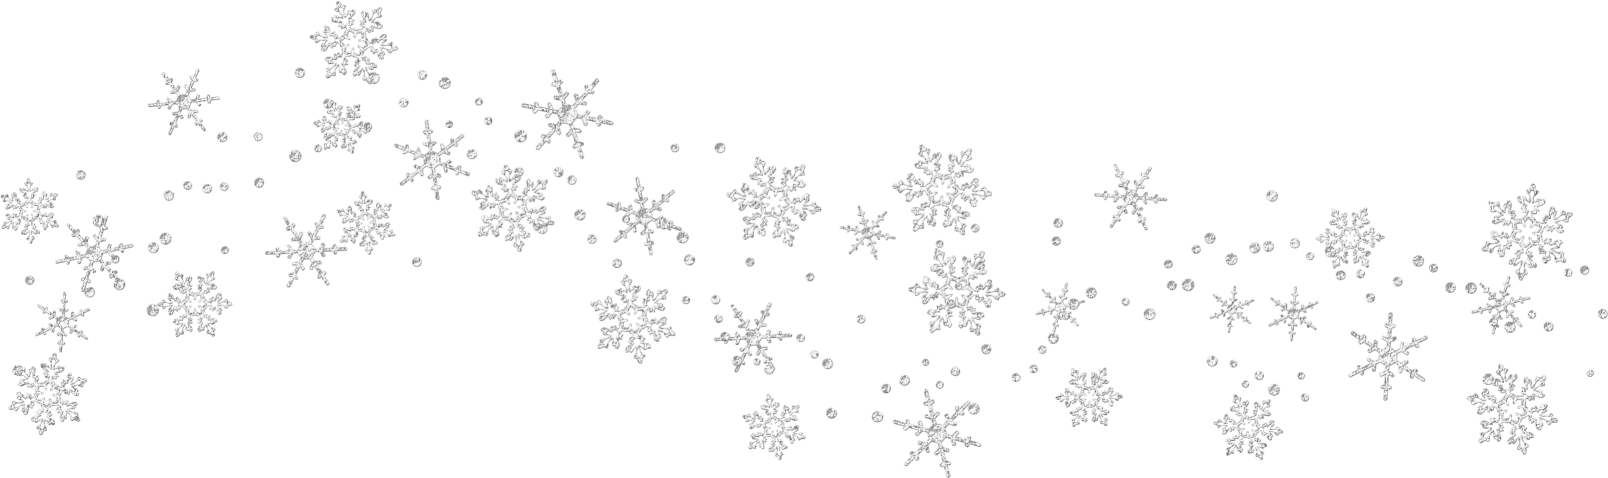 snowflake clipart fun